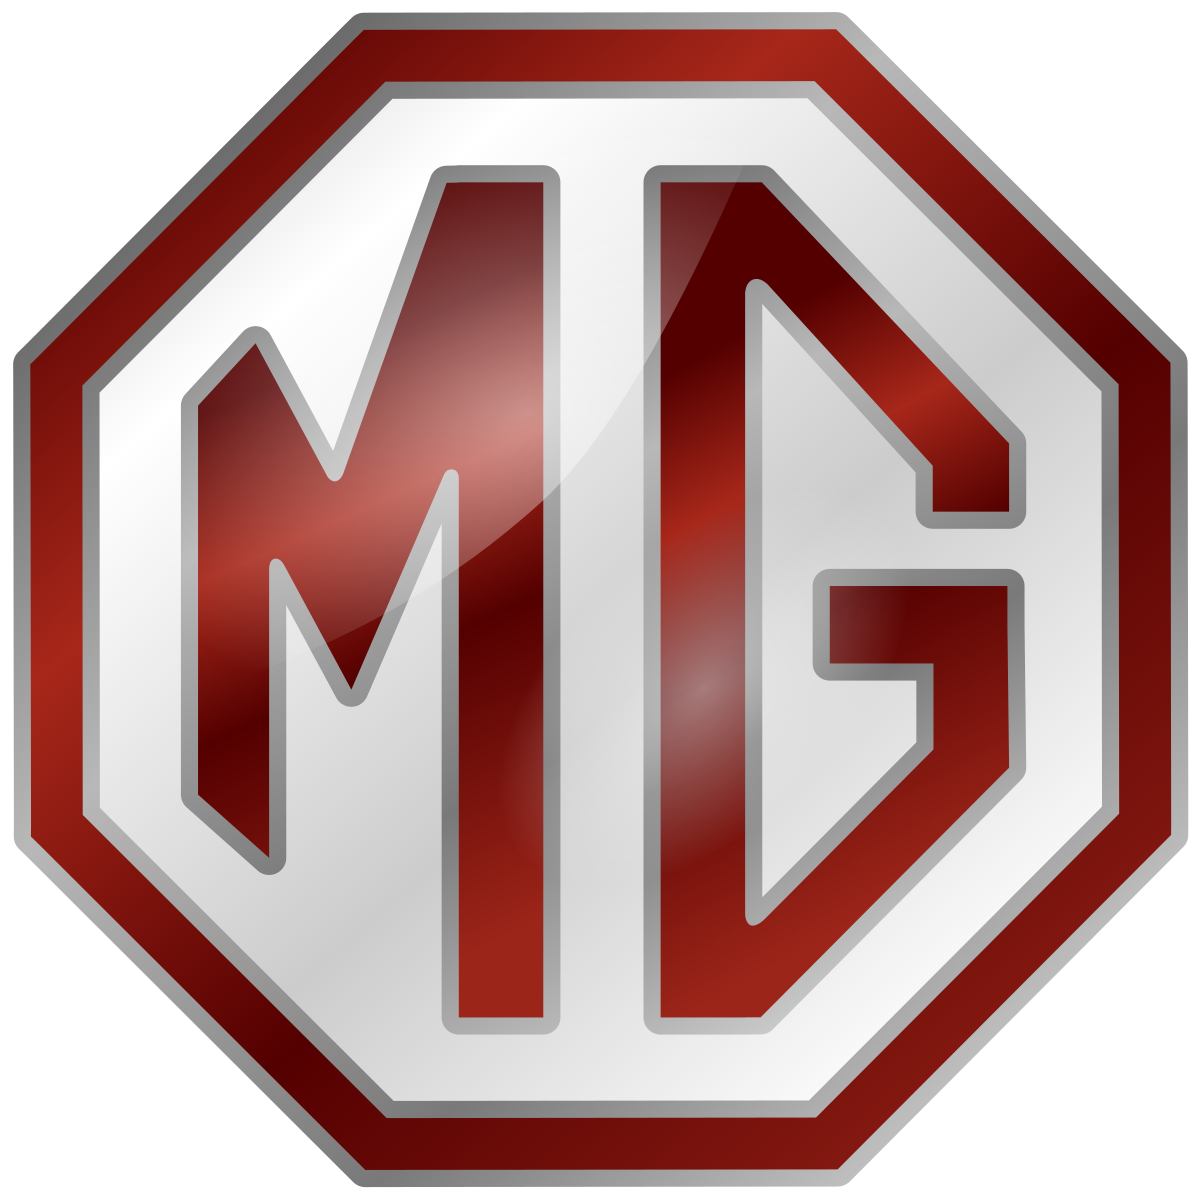 https://upload.wikimedia.org/wikipedia/de/thumb/e/e9/MG_Automarke_Logo.svg/1200px-MG_Automarke_Logo.svg.png